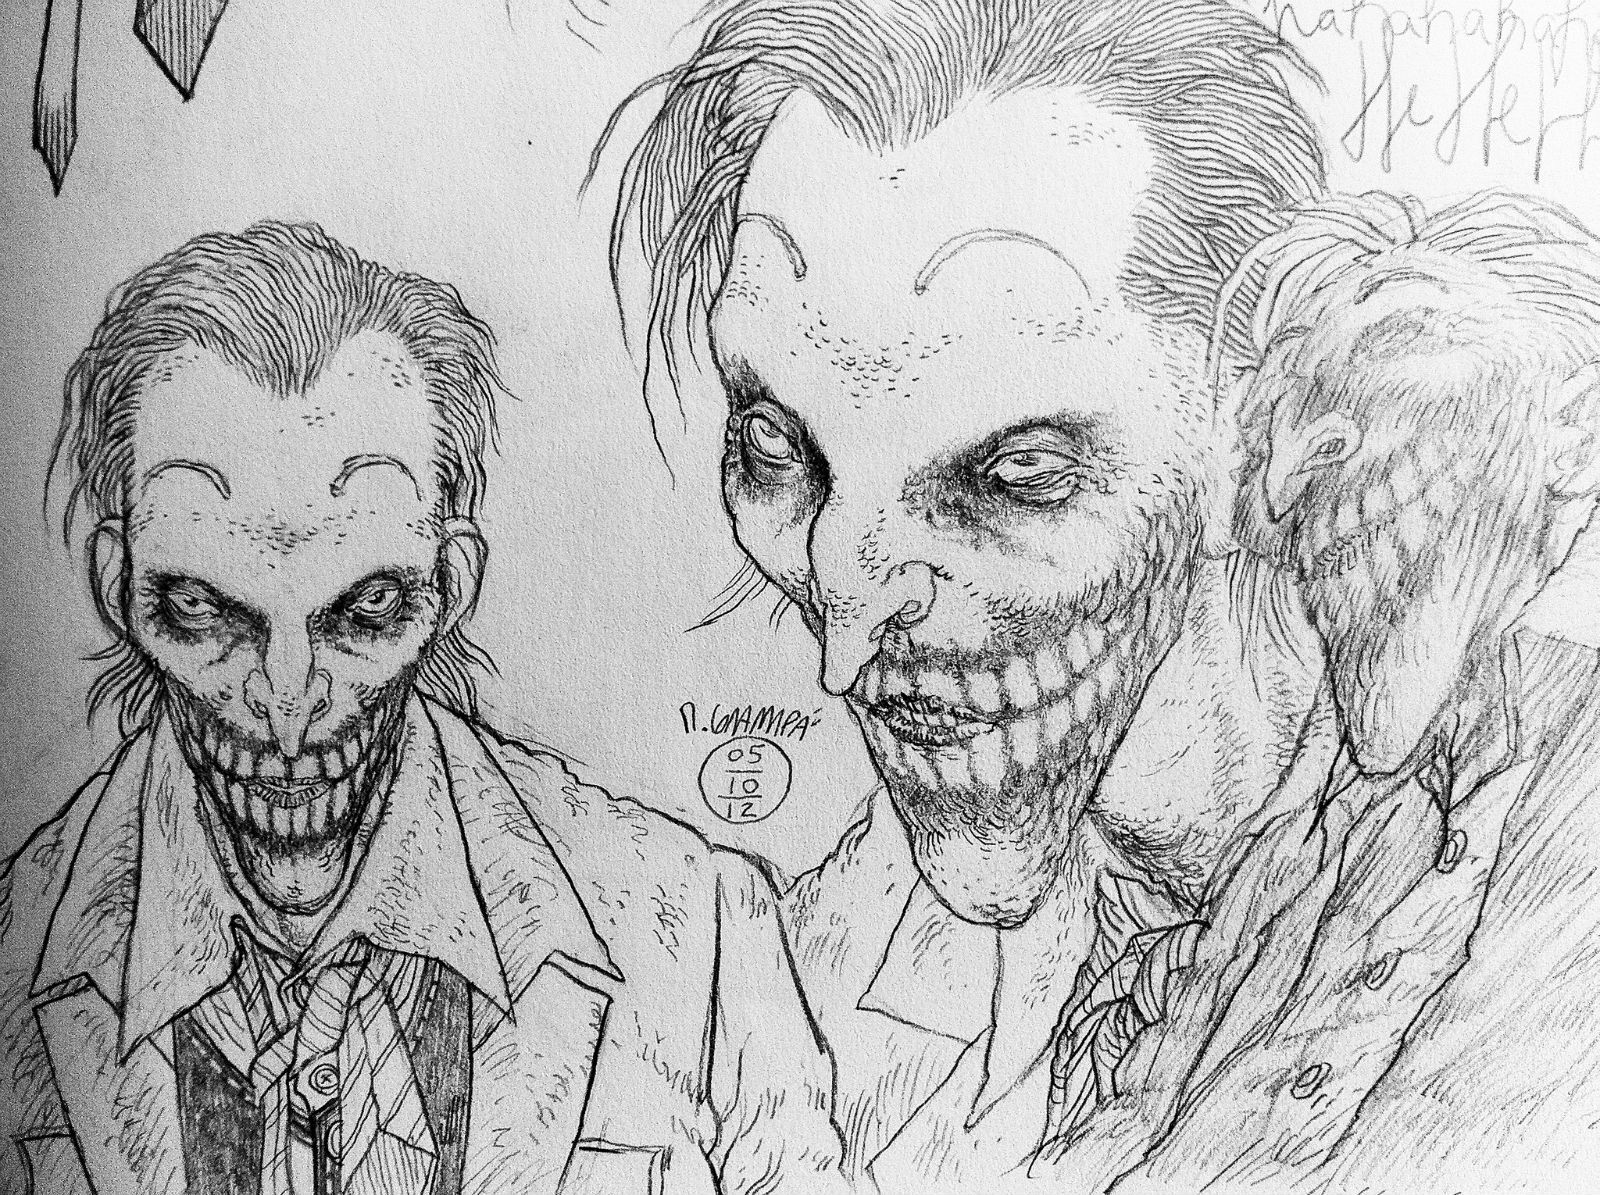 The Joker by Rafael Grampa